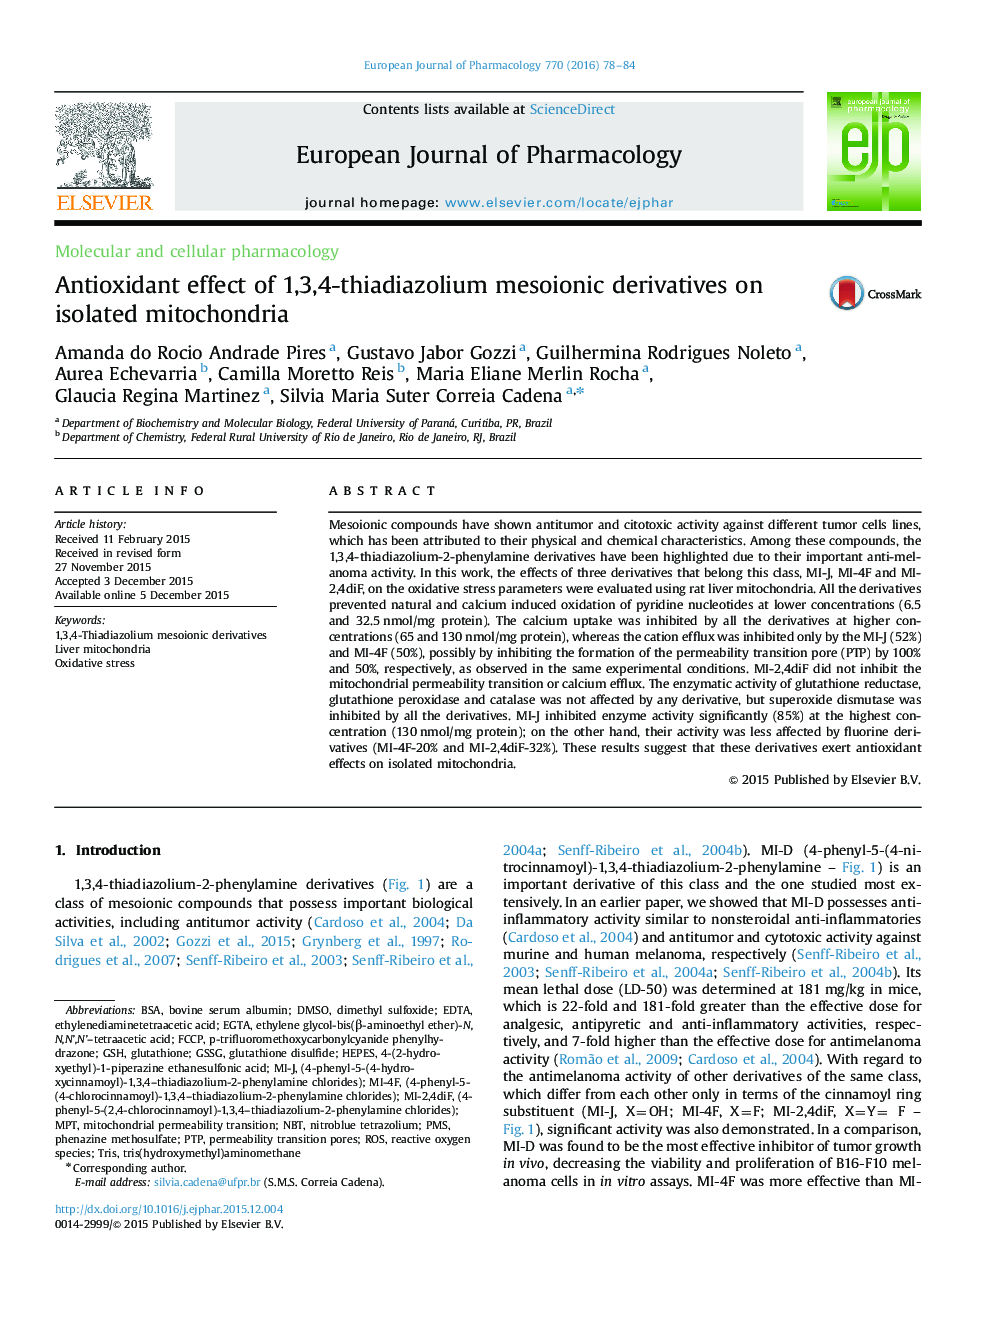 Antioxidant effect of 1,3,4-thiadiazolium mesoionic derivatives on isolated mitochondria